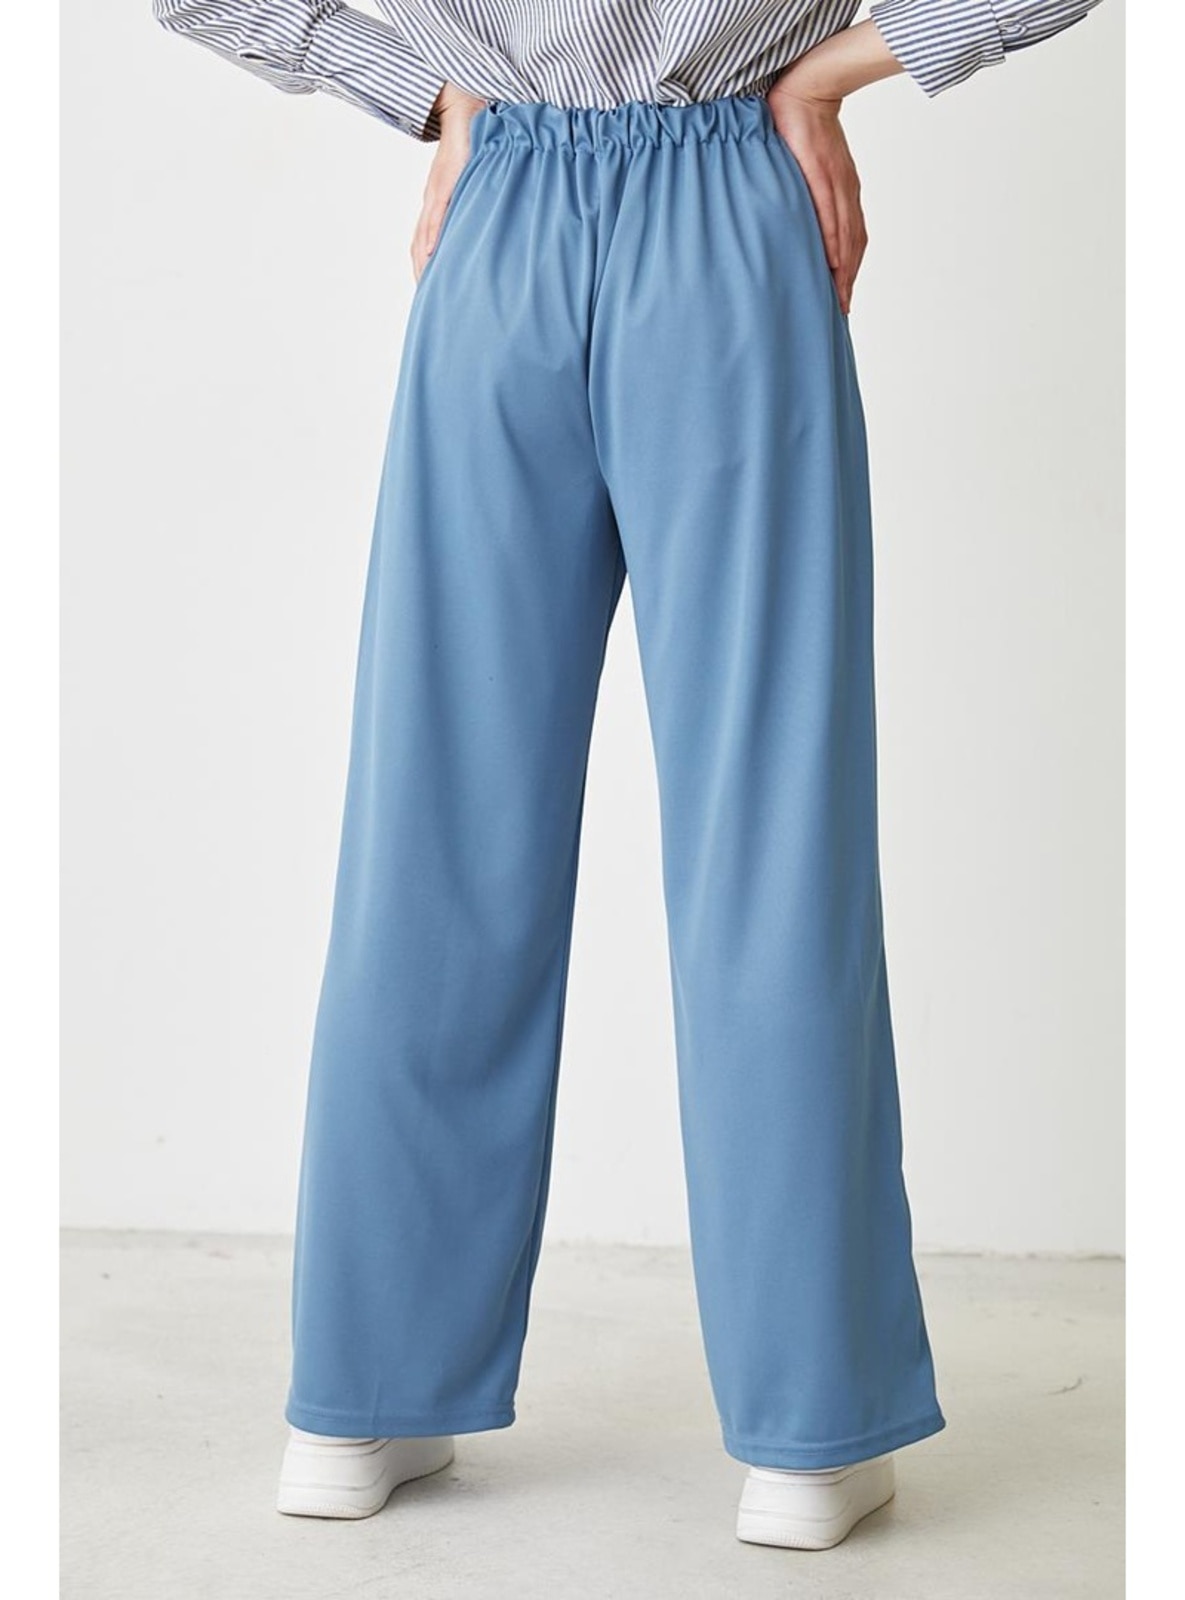 Turquoise - Plus Size Pants